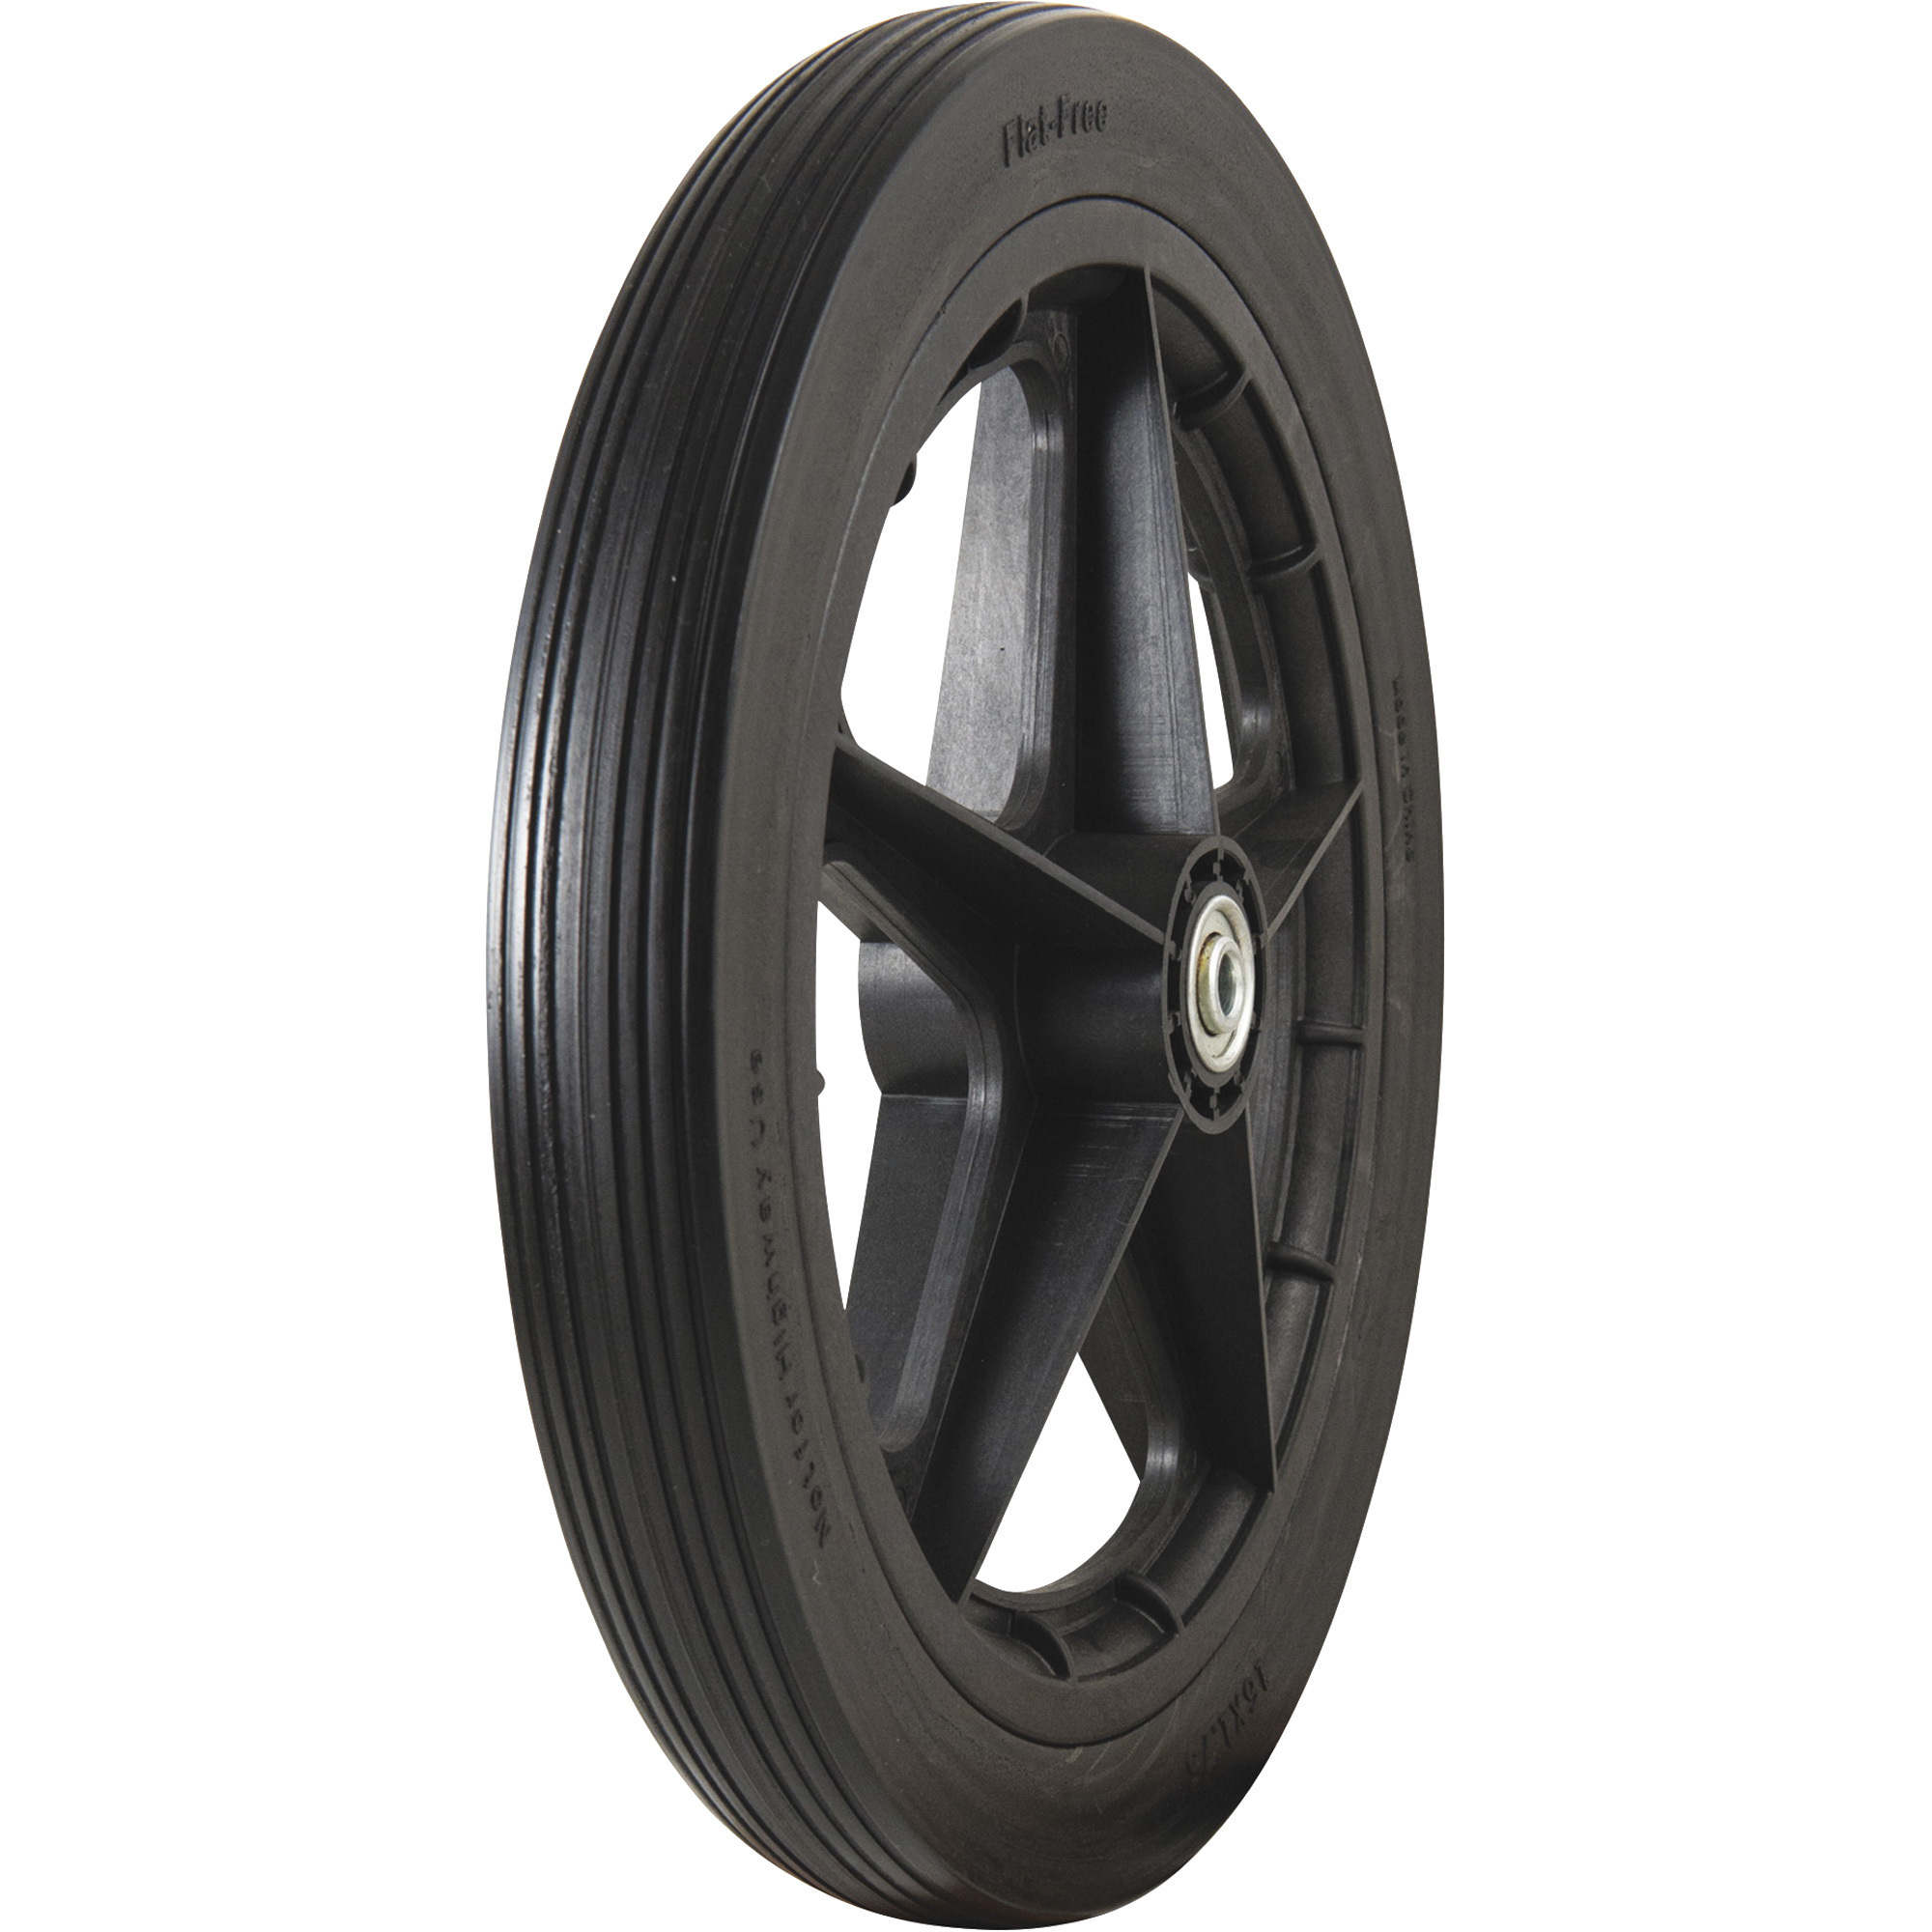 Marathon Tires Flat-Free Tire on Plastic Spoke Rim â 1/2Inch Bore, 16 x 1.85Inch